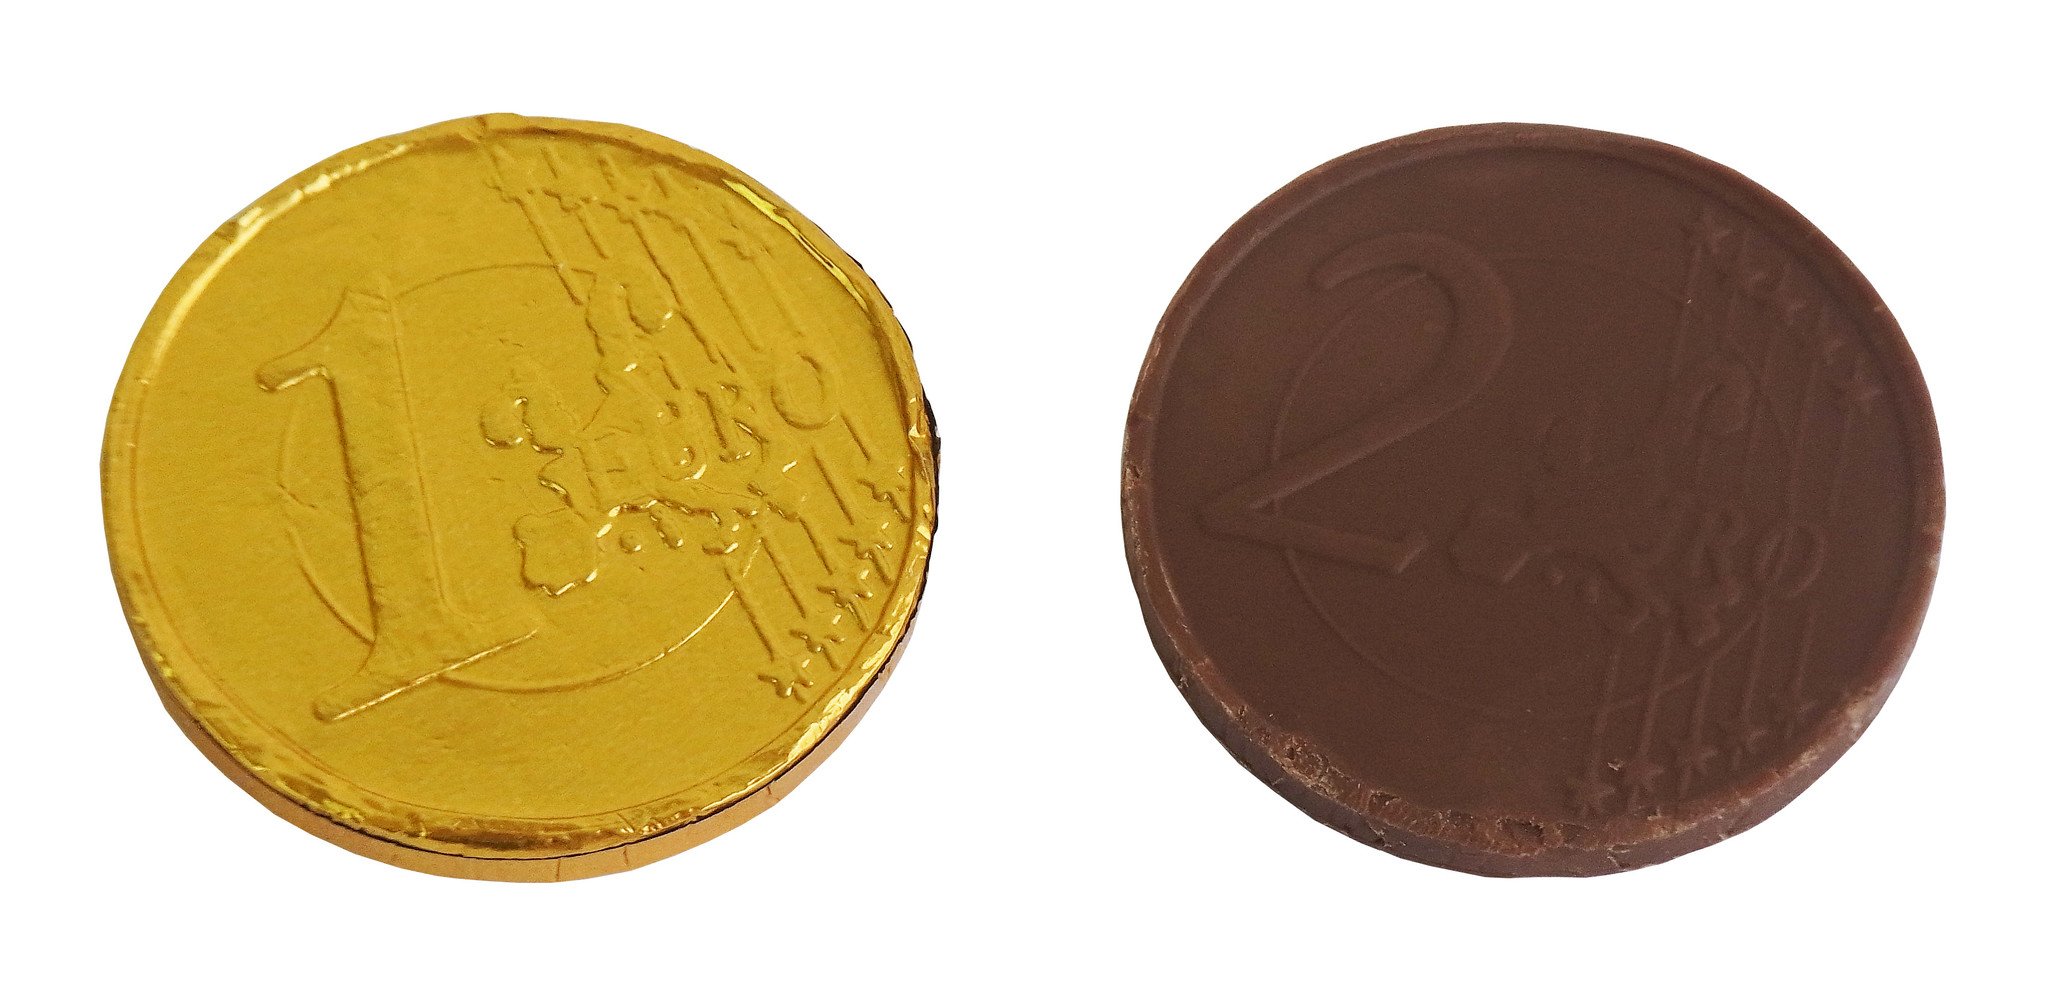 CAPTAIN PLAY Goldmünzen Kindergeburtstag Sckokolade, 700g Goldmünzen Schokolade im Party Bucket